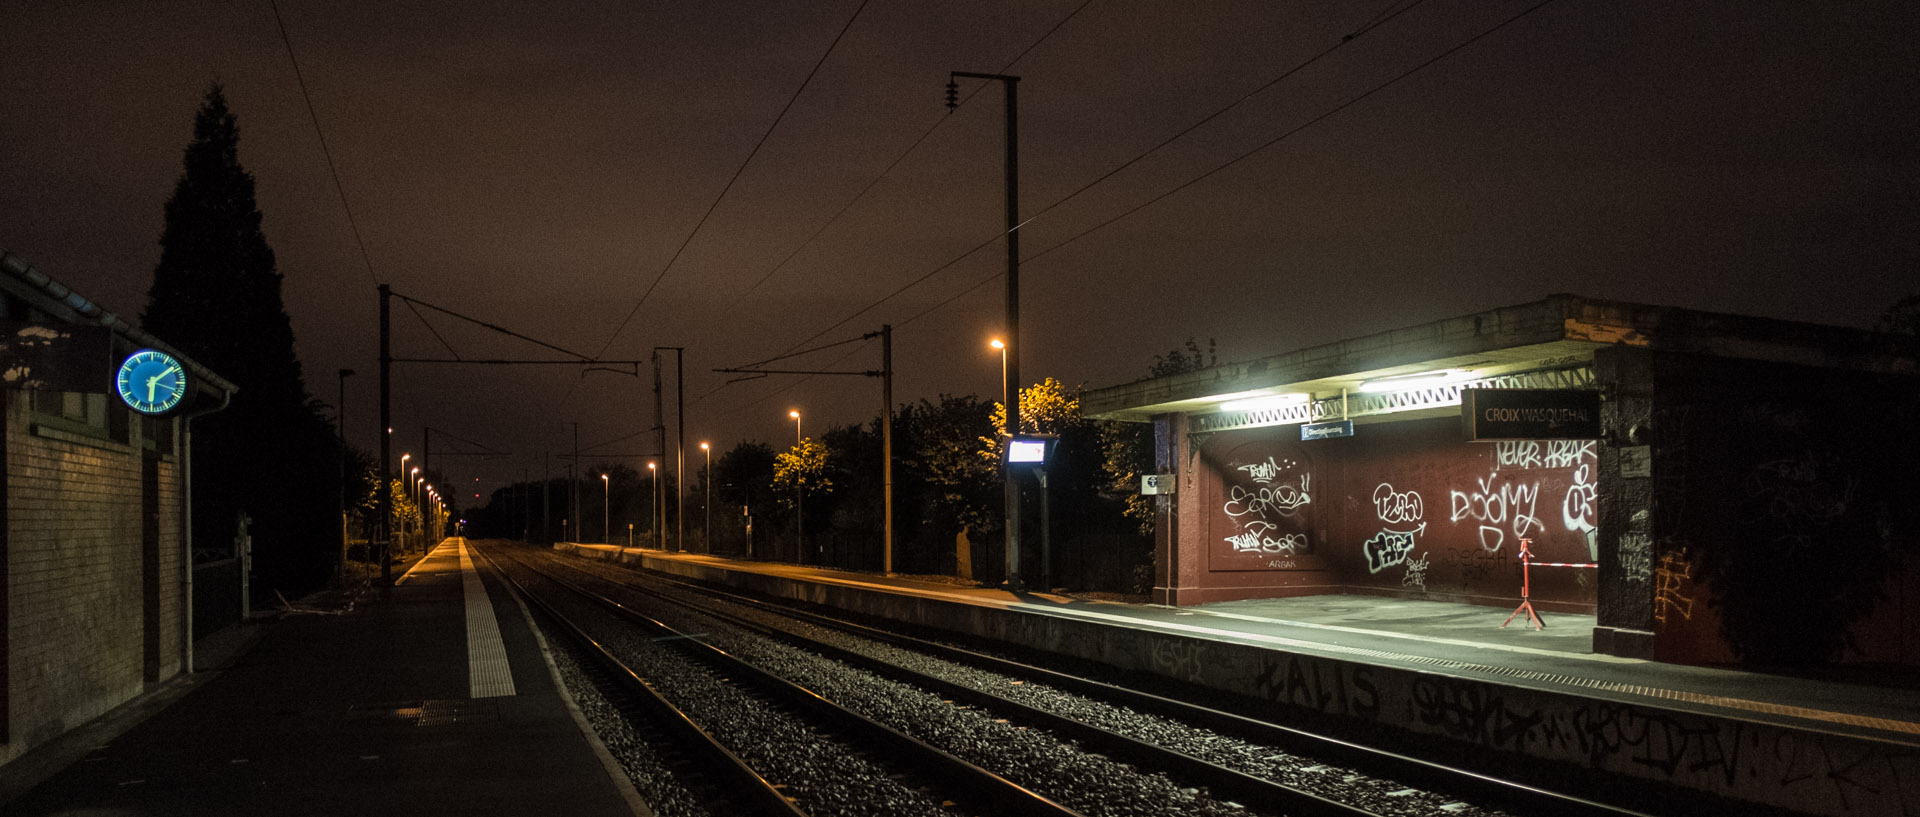 Dimanche 3 novembre 2013, 18:07, gare de Croix Wasquehal